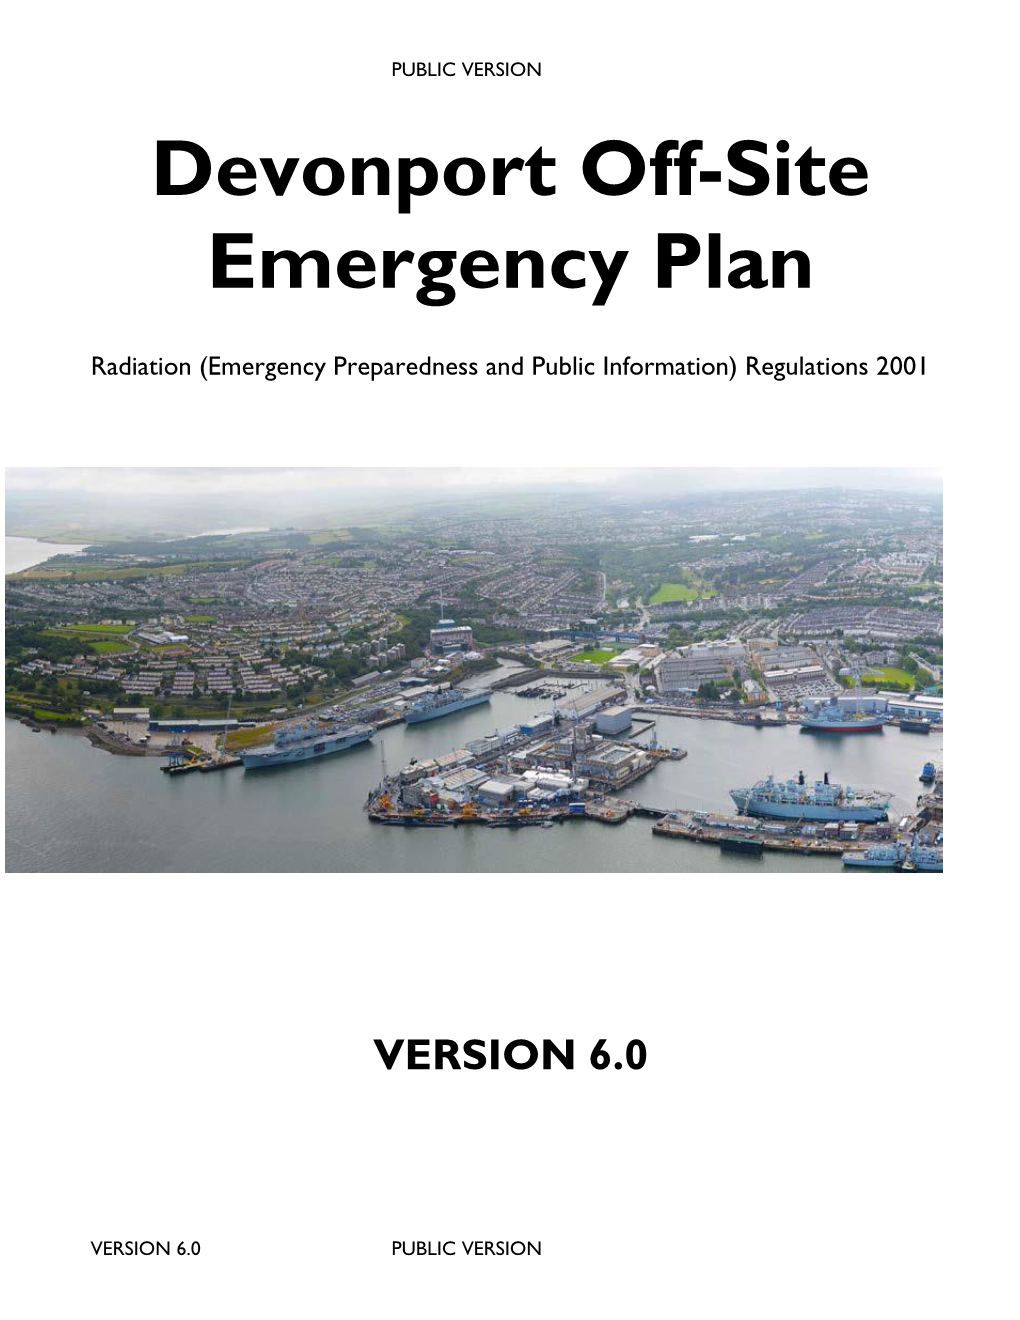 Devonport Off-Site Emergency Plan